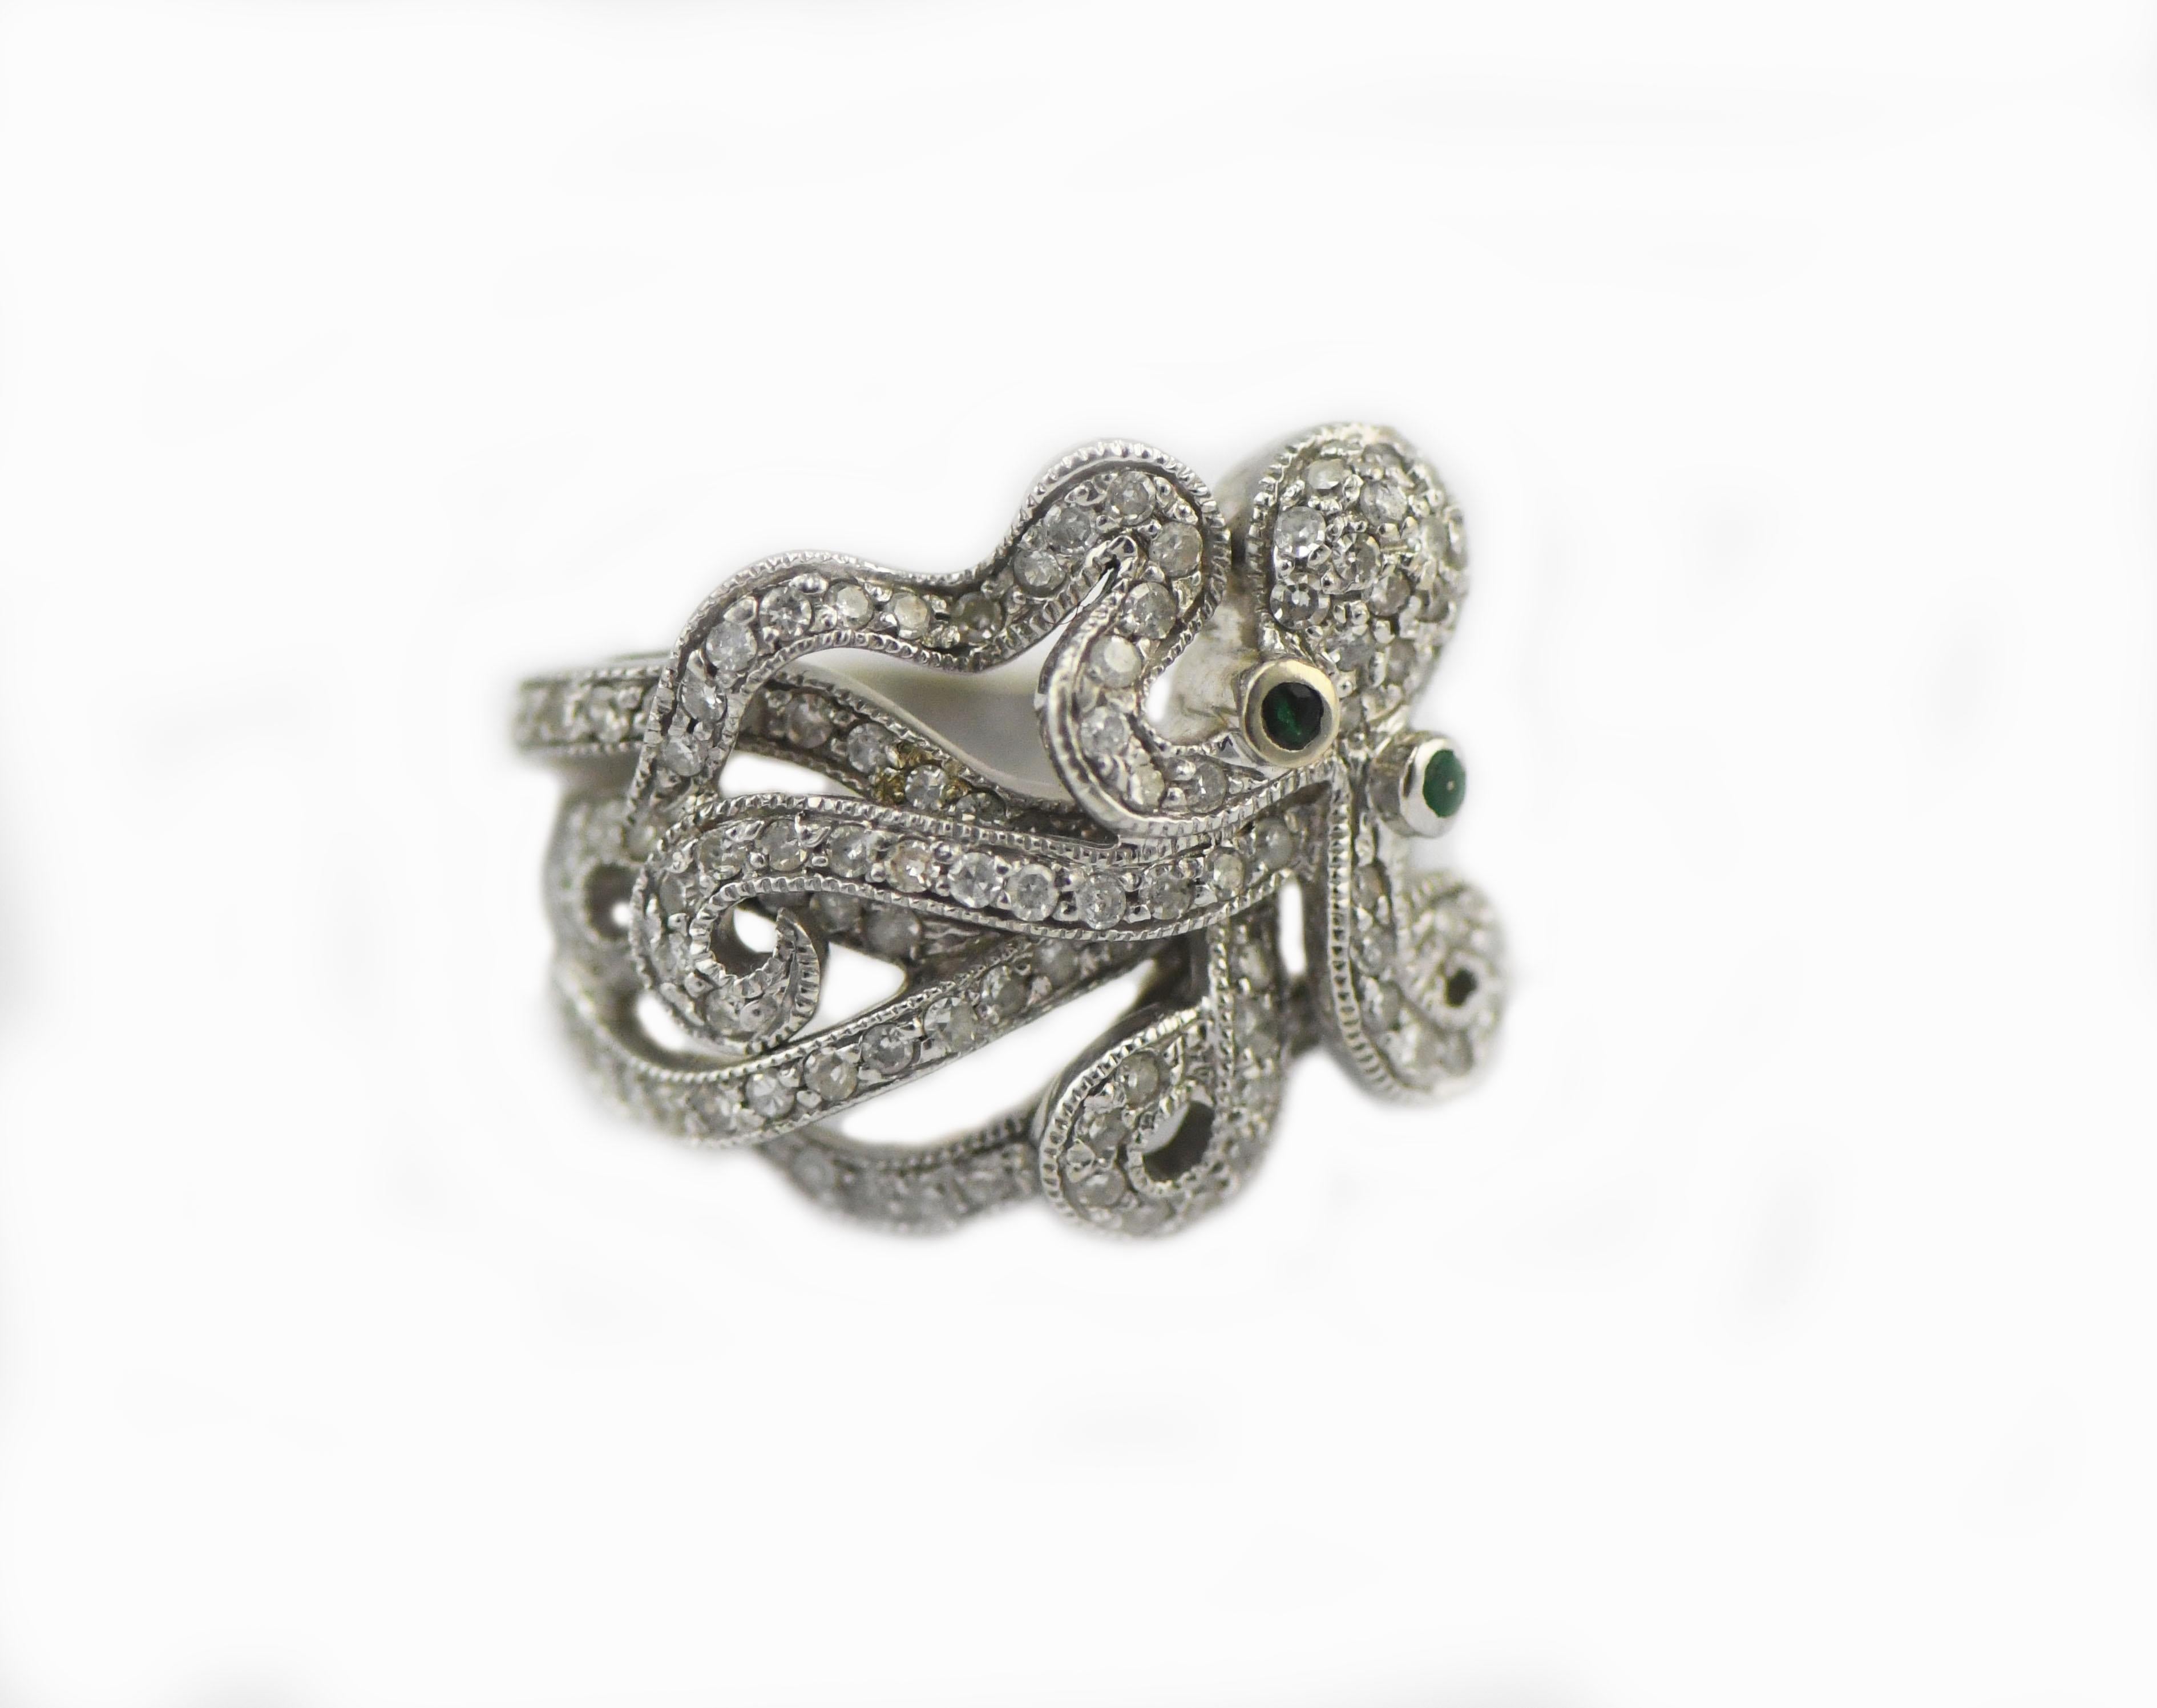 Round Cut John C. Rinker Octopus Ring 1 Carat Diamonds with Emerald Eyes